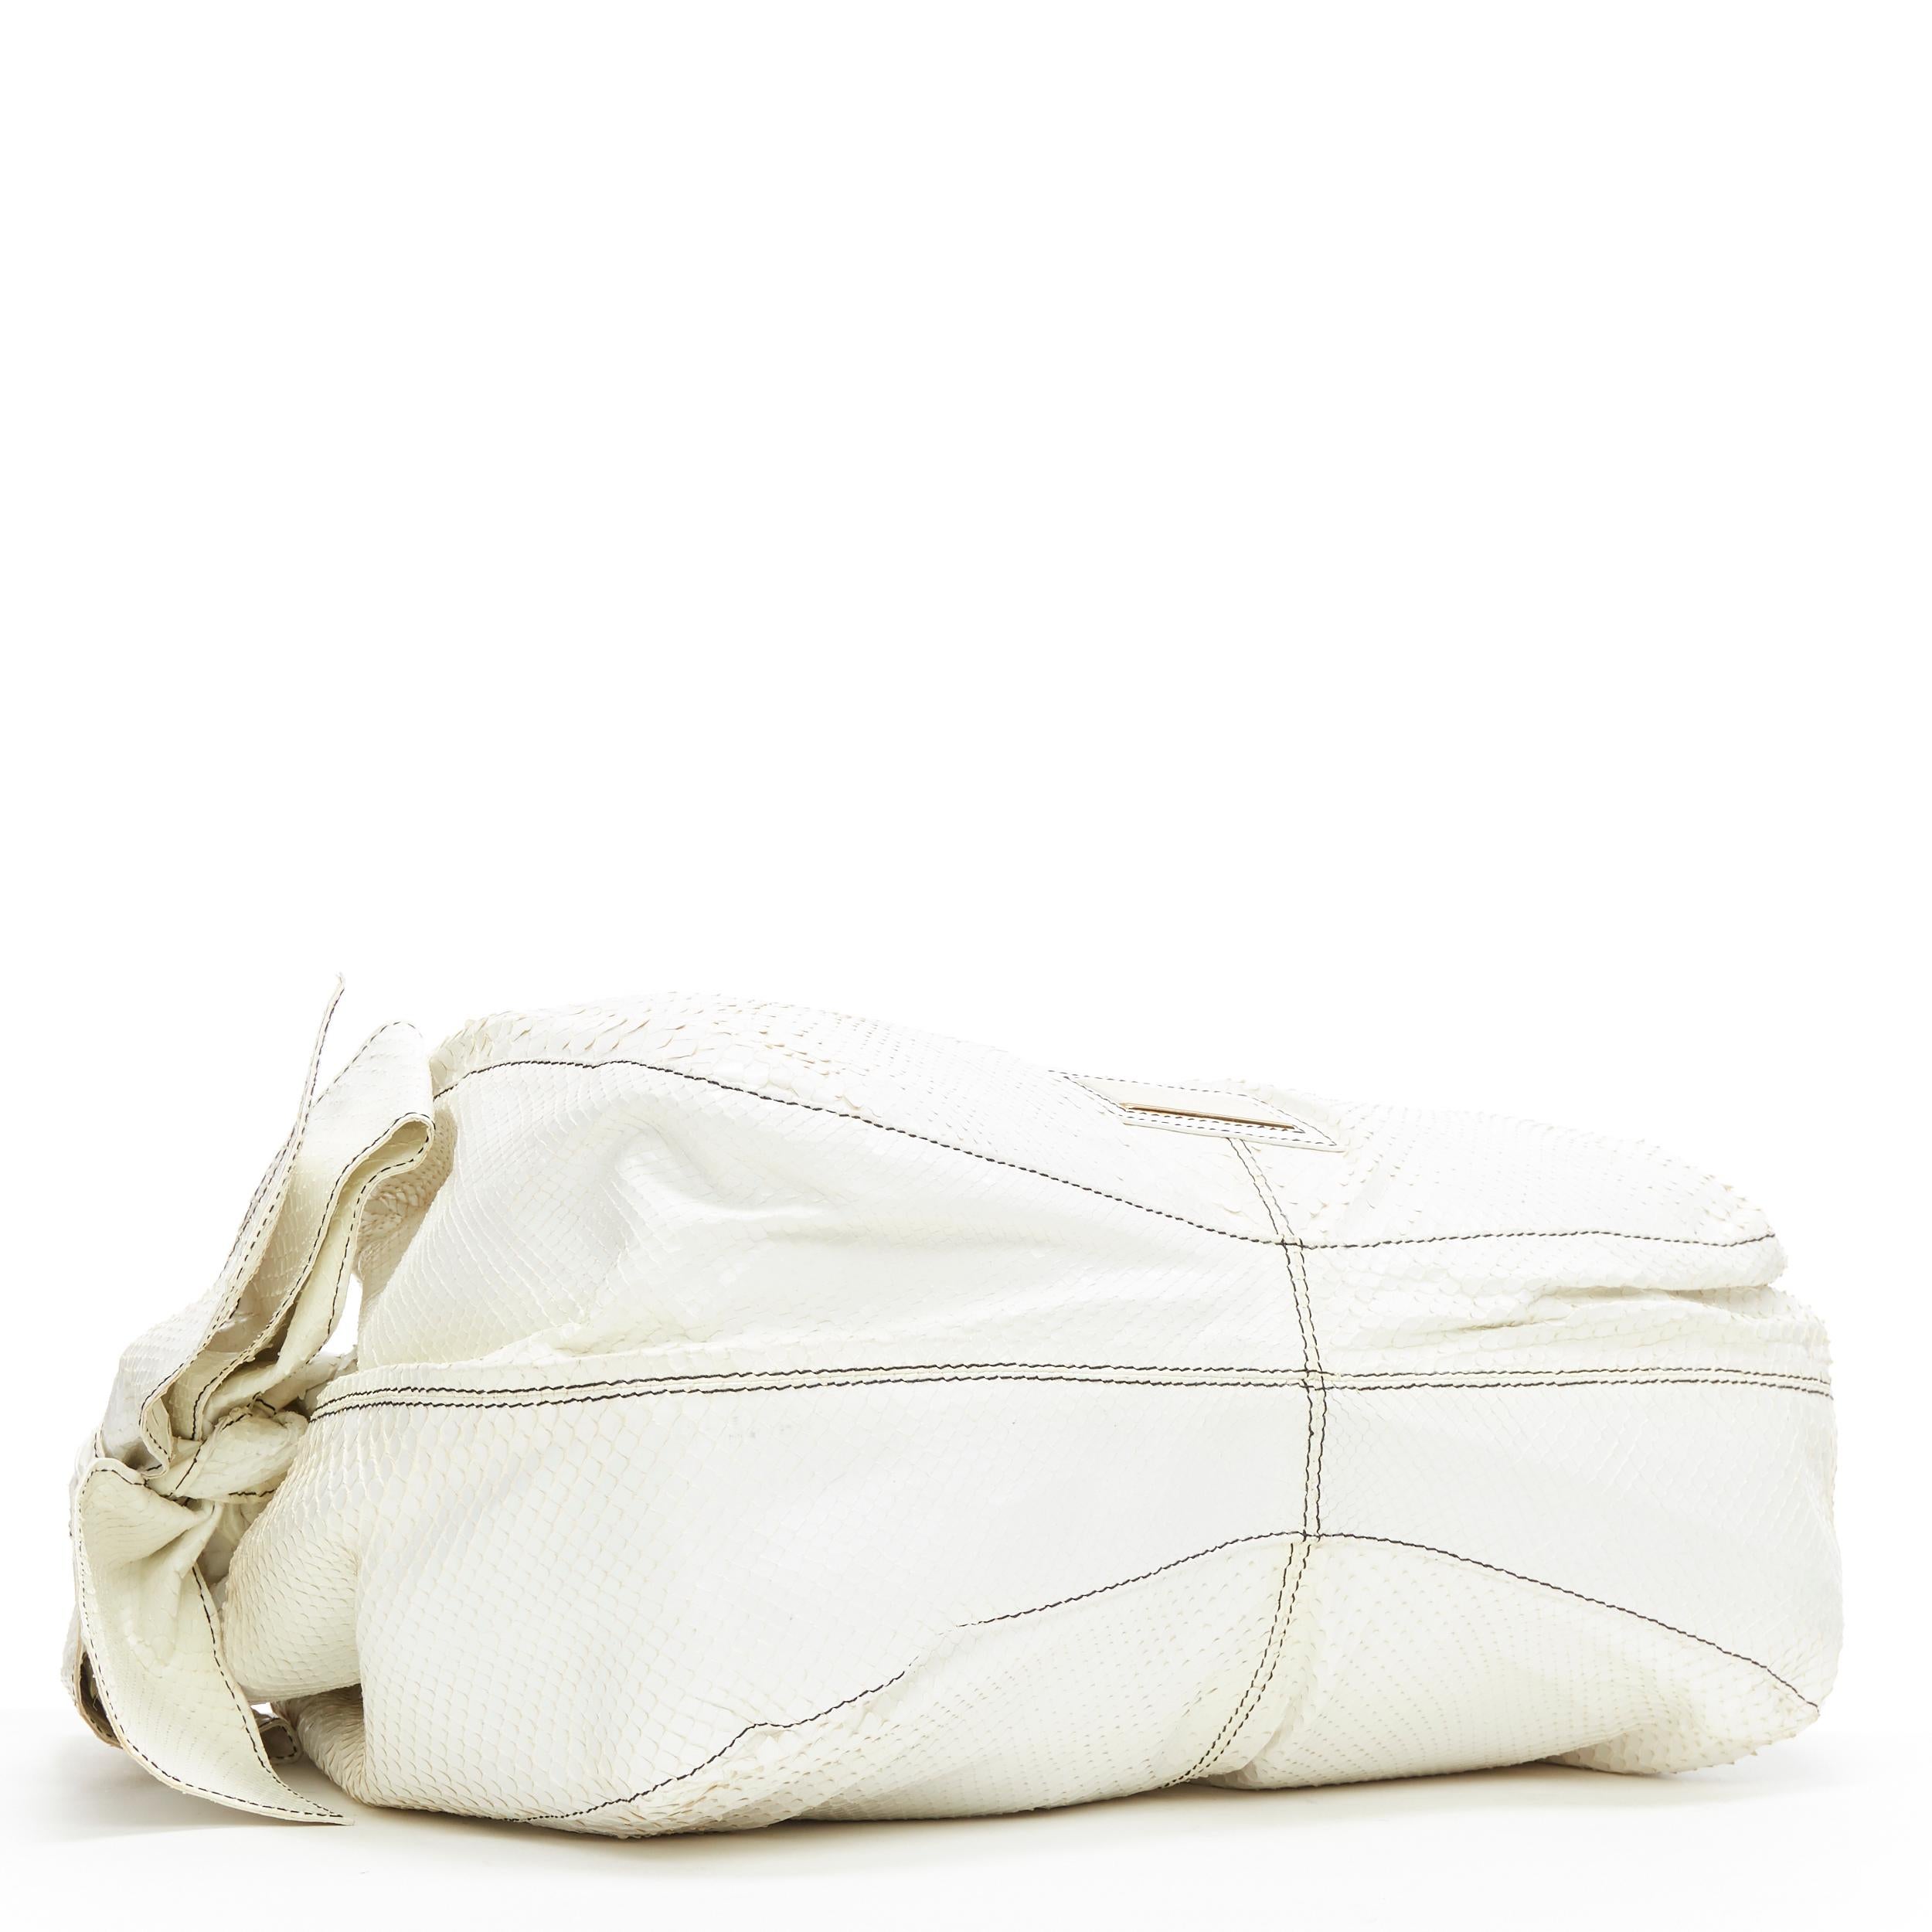 White VALENTINO GARAVANI white scaled leather large box top handle large hobo bag